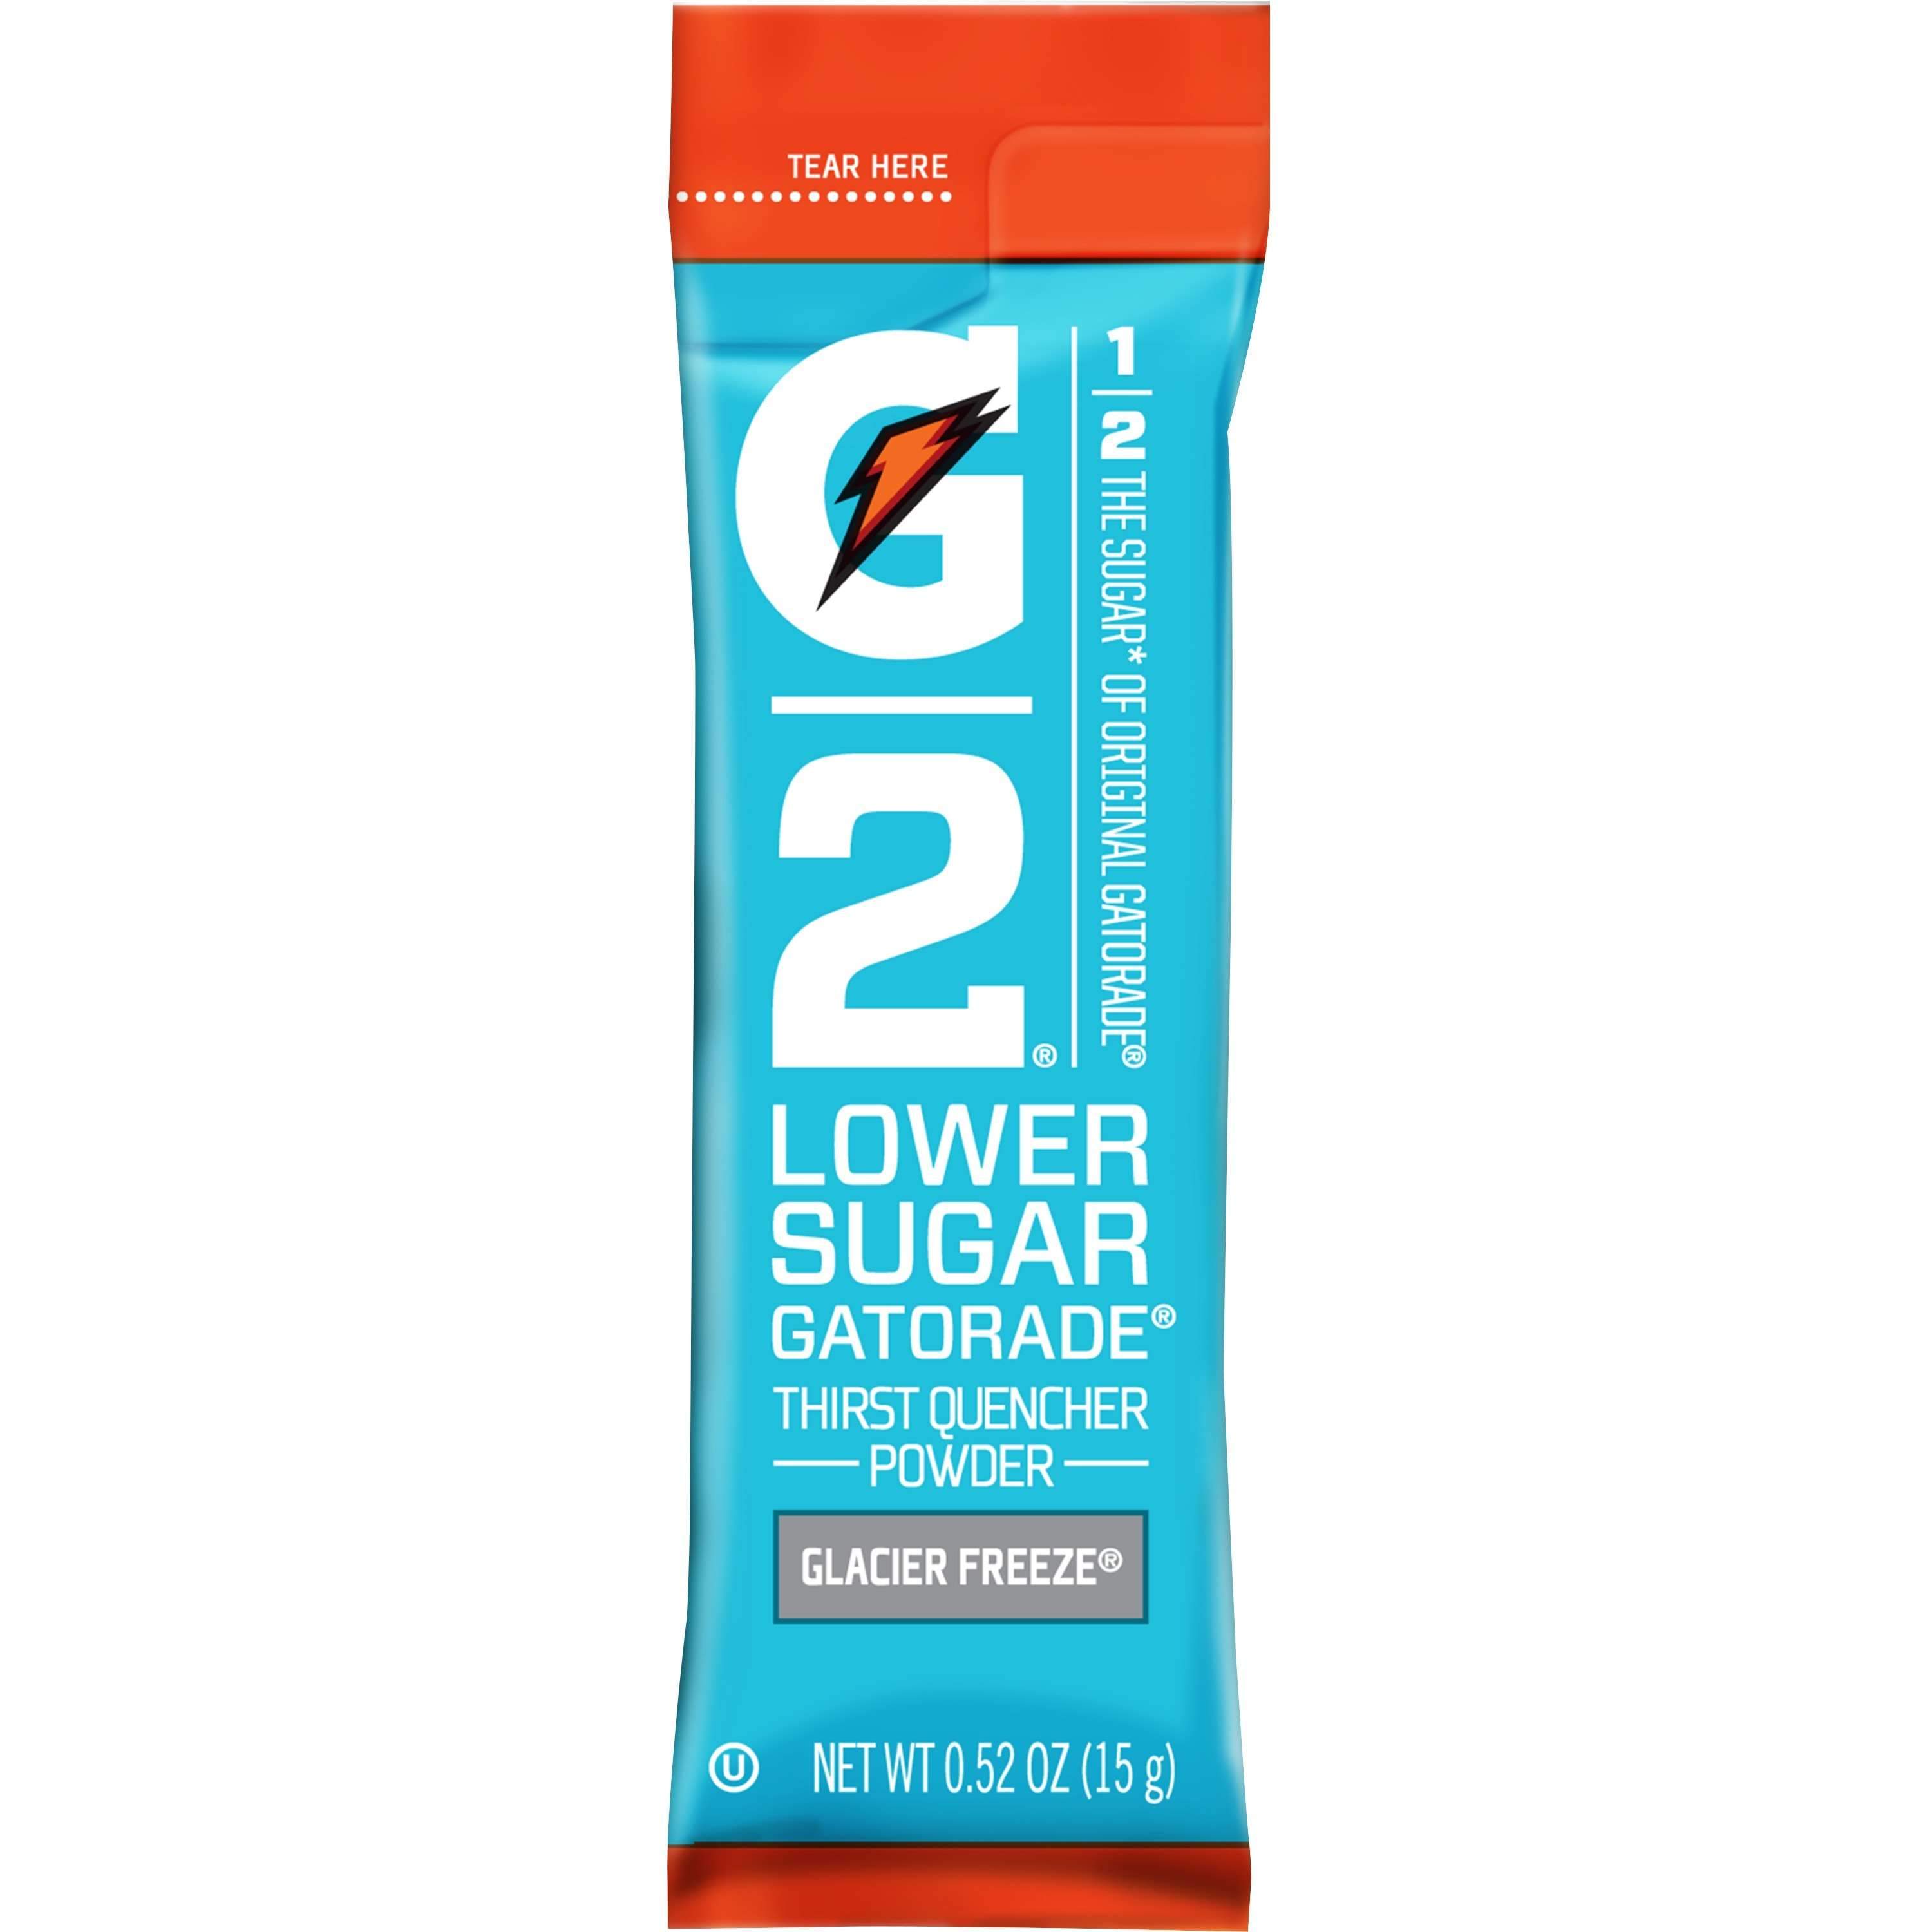 Gatorade Thirst Quencher Powder Packs (Lower Sugar) Gatorade Glacier Freeze 0.52 Ounce 